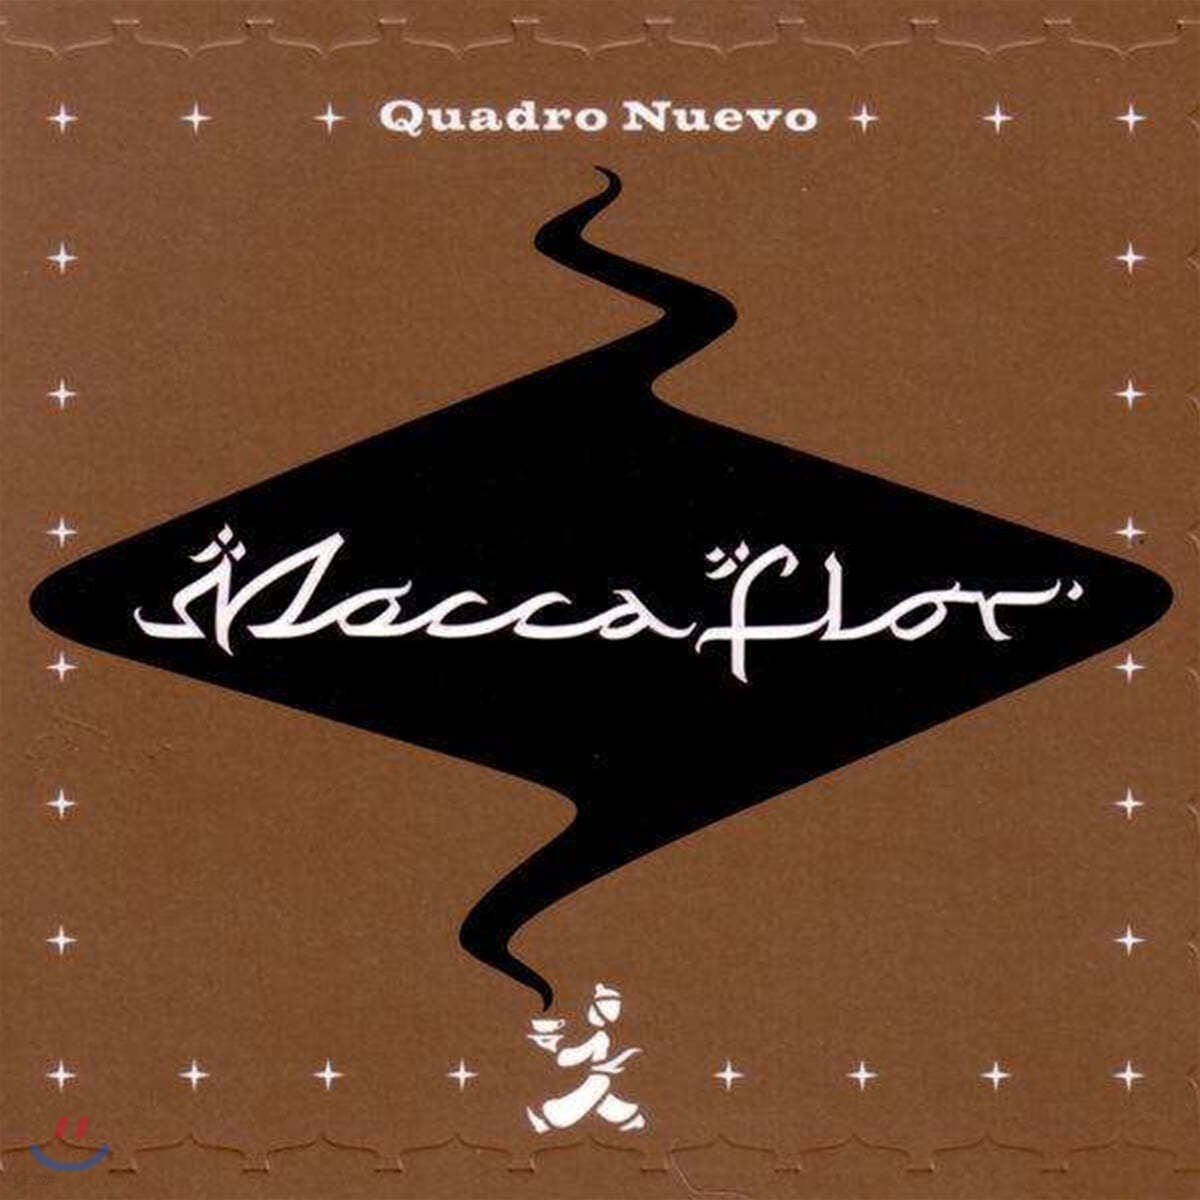 Quadro Nuevo (콰드로 누에보) - Mocca Flor